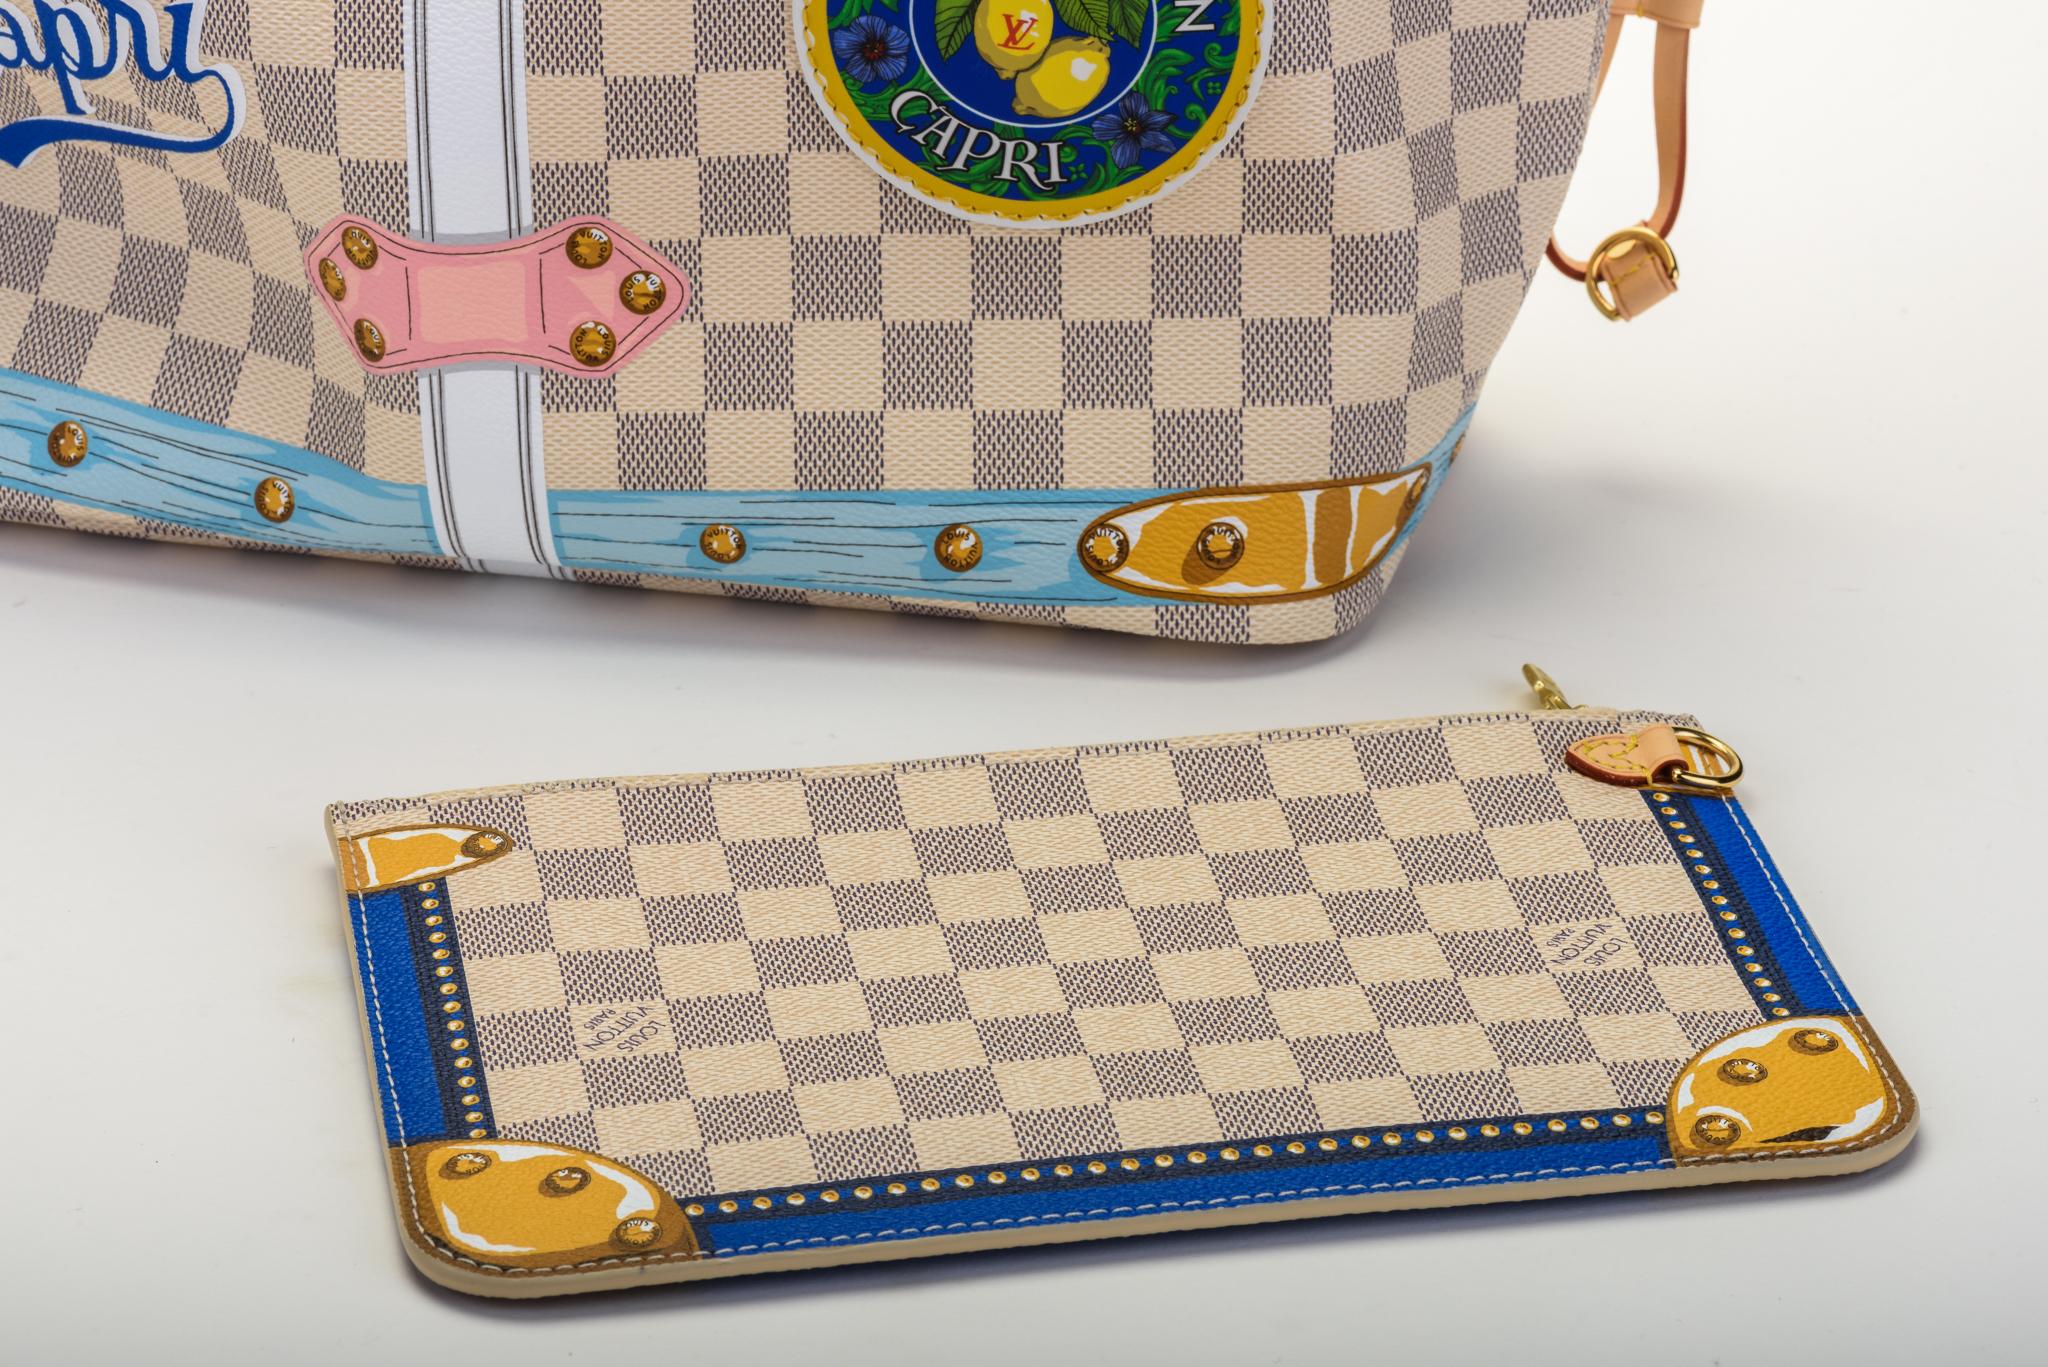 New in Box Louis Vuitton Limited Edition Capri Neverfull Damier Azur Bag 7